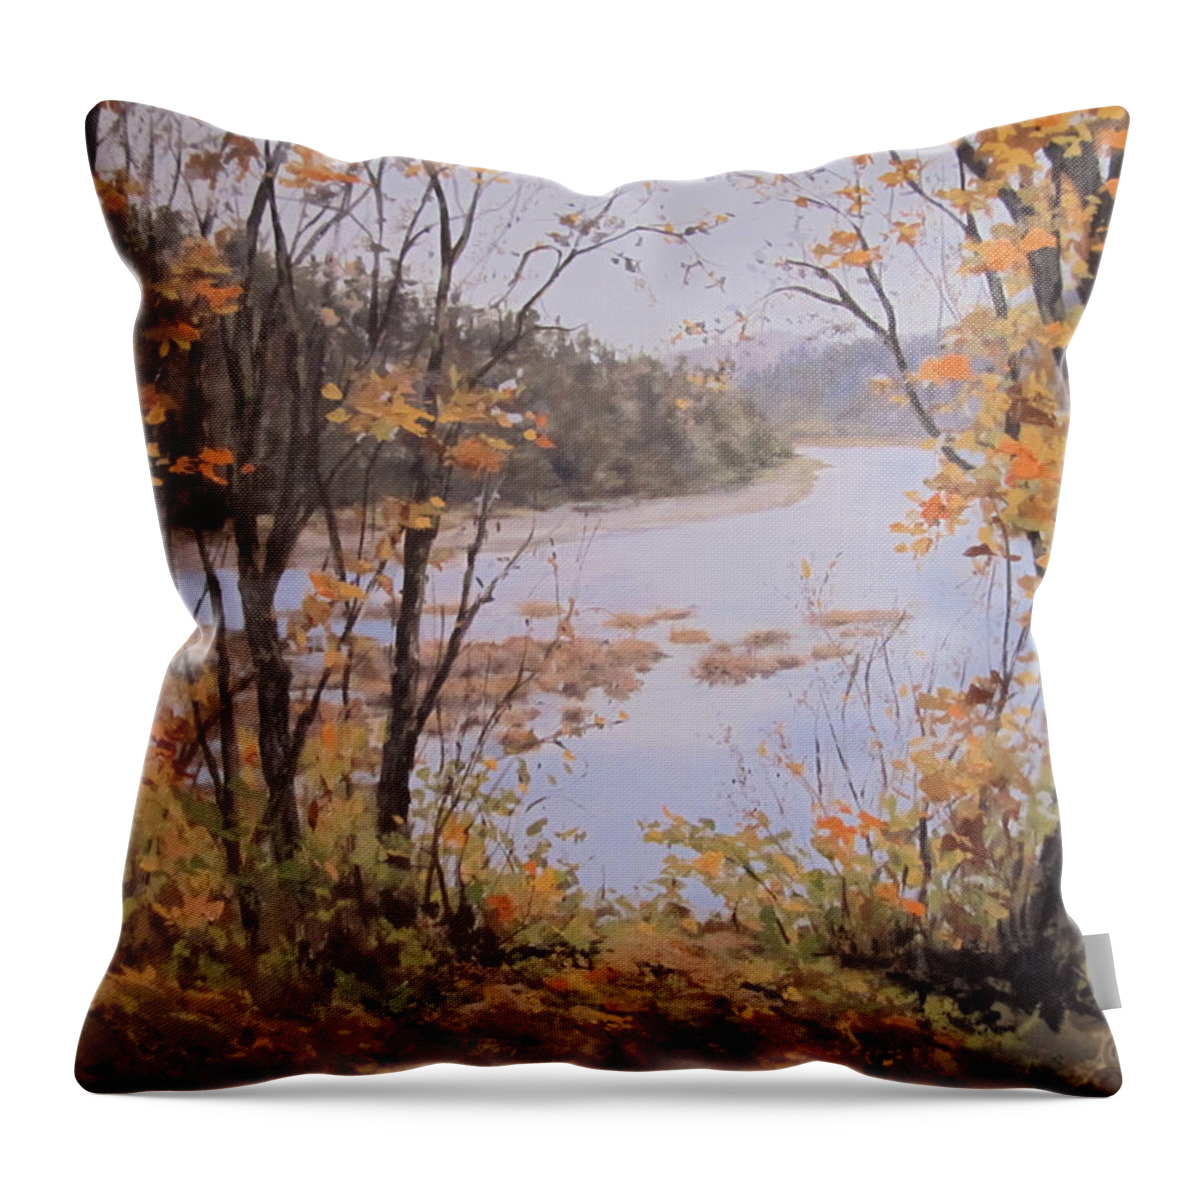 Autumn Throw Pillow featuring the painting Autumn Splash by Karen Ilari